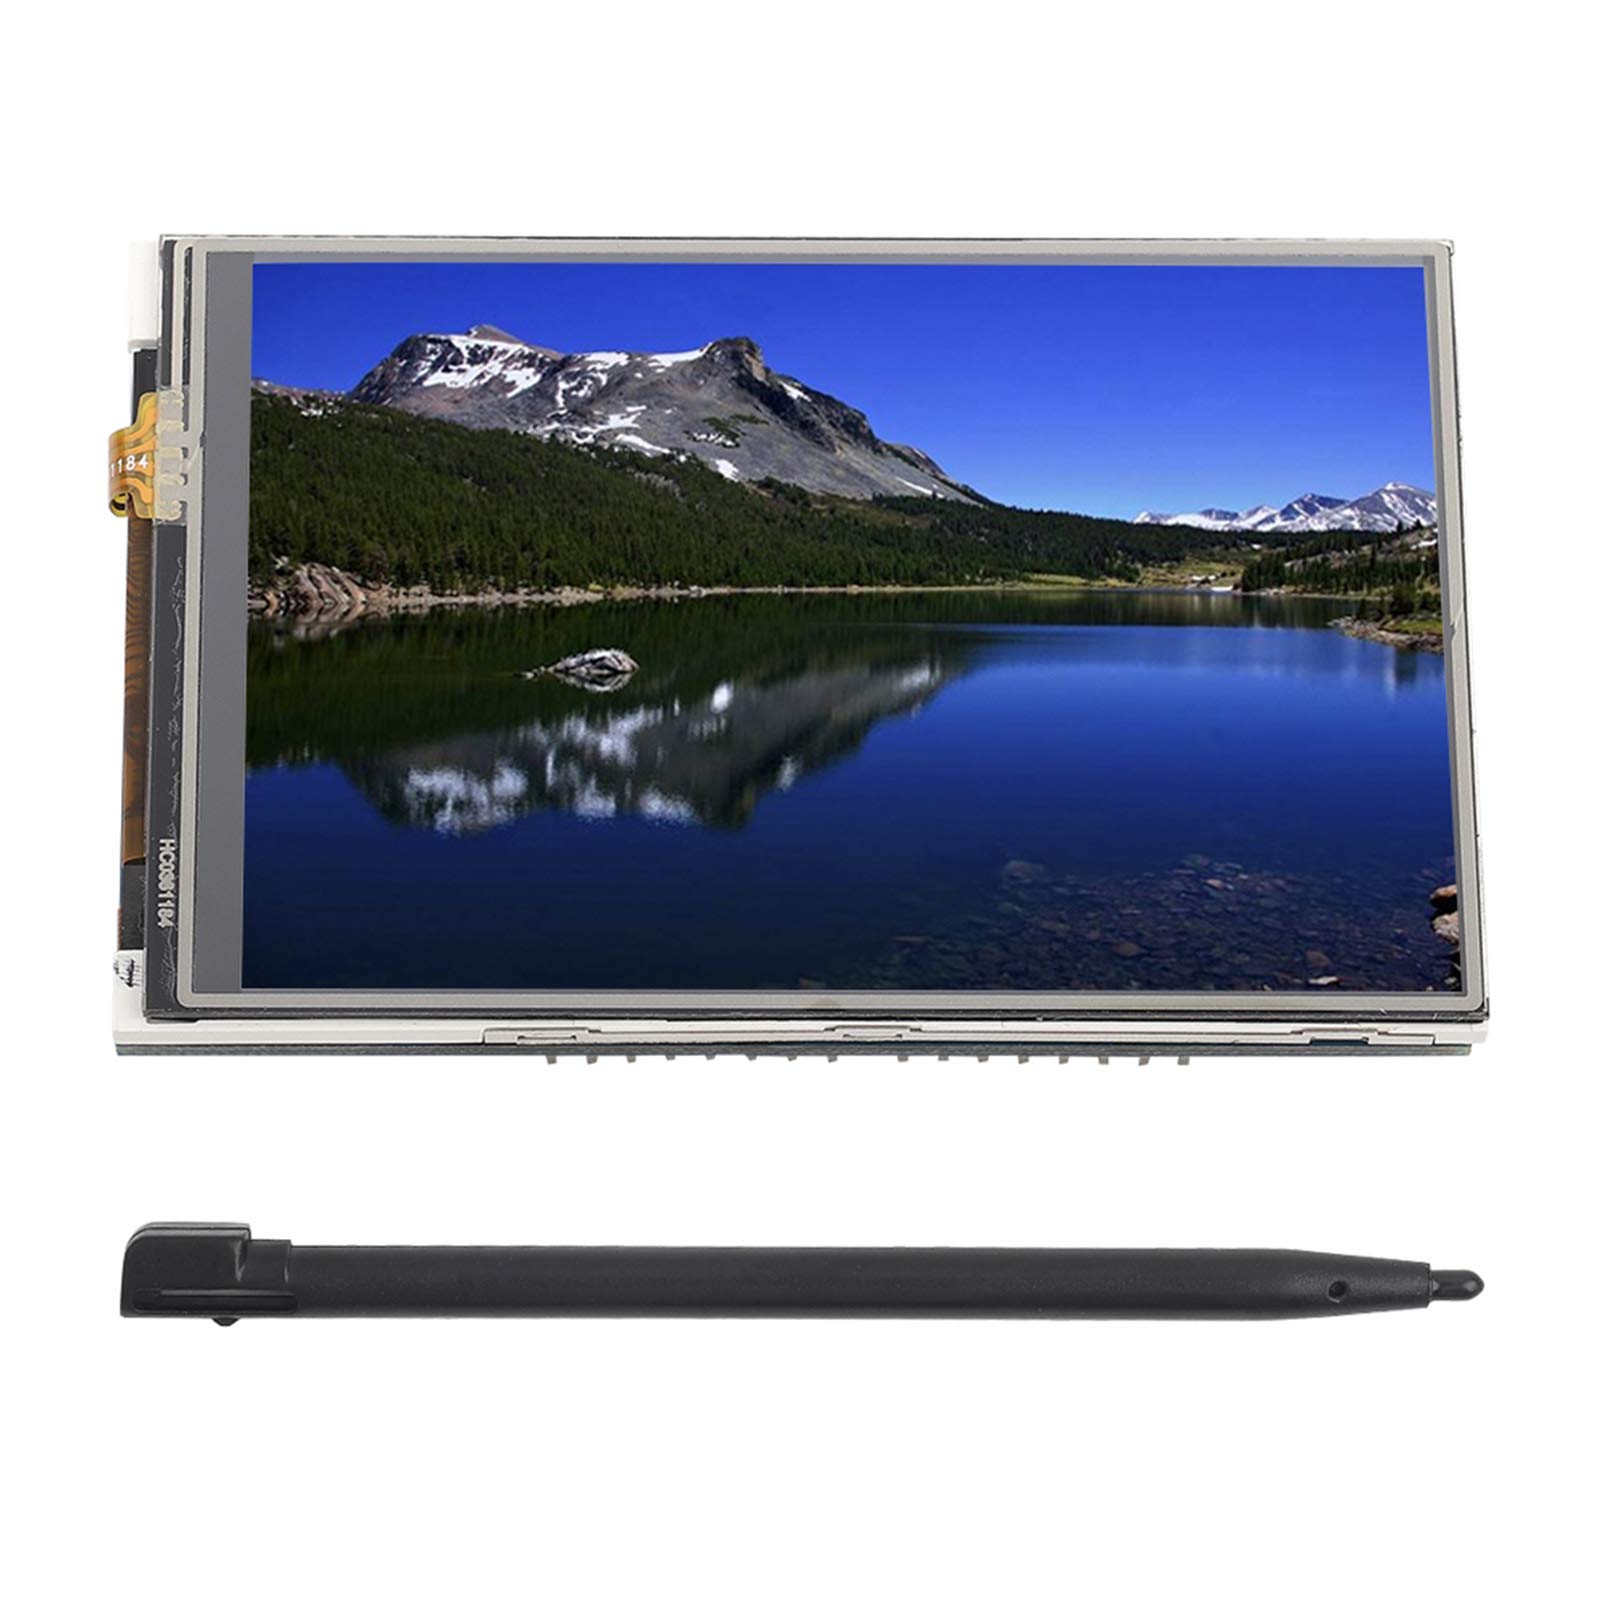 Anzeigemodul - 3,5" TFT-LCD-Modul LCD-Display-Modul 480x320 for 2560 Vorstand (Auflage : Touch Panel)